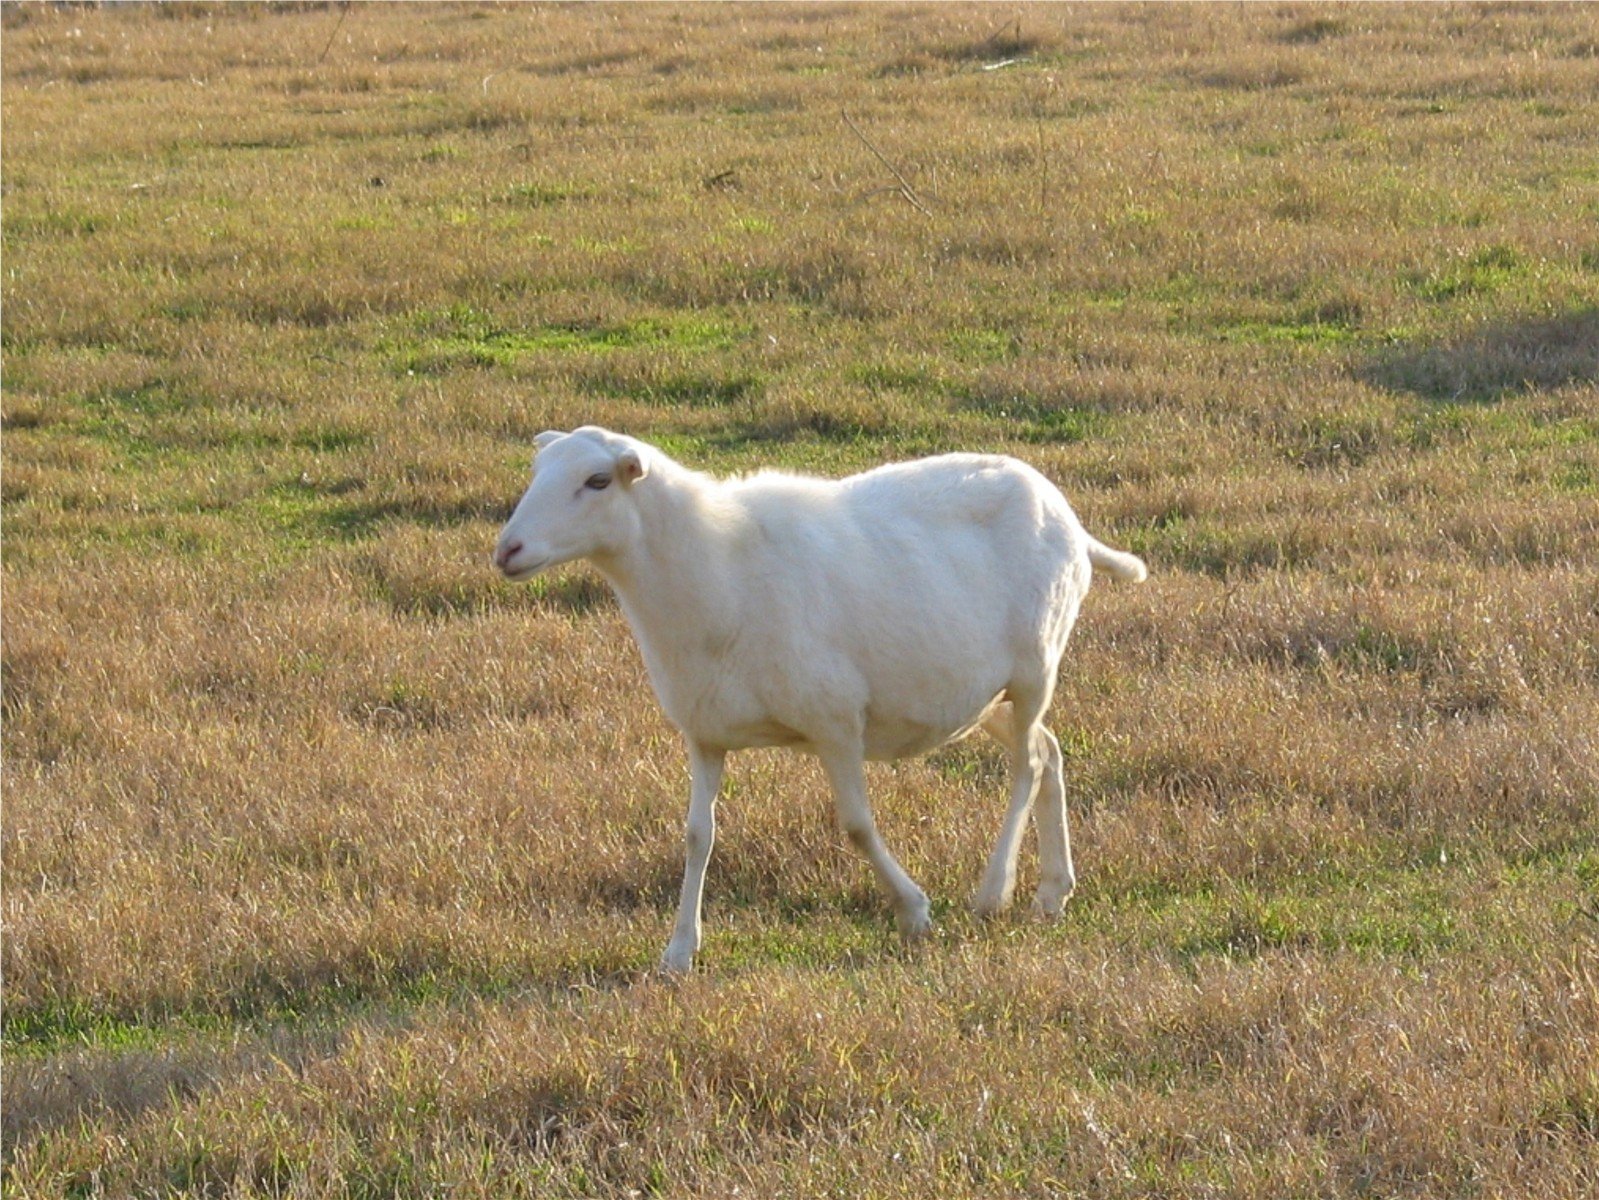 a white goat is walking through an empty field